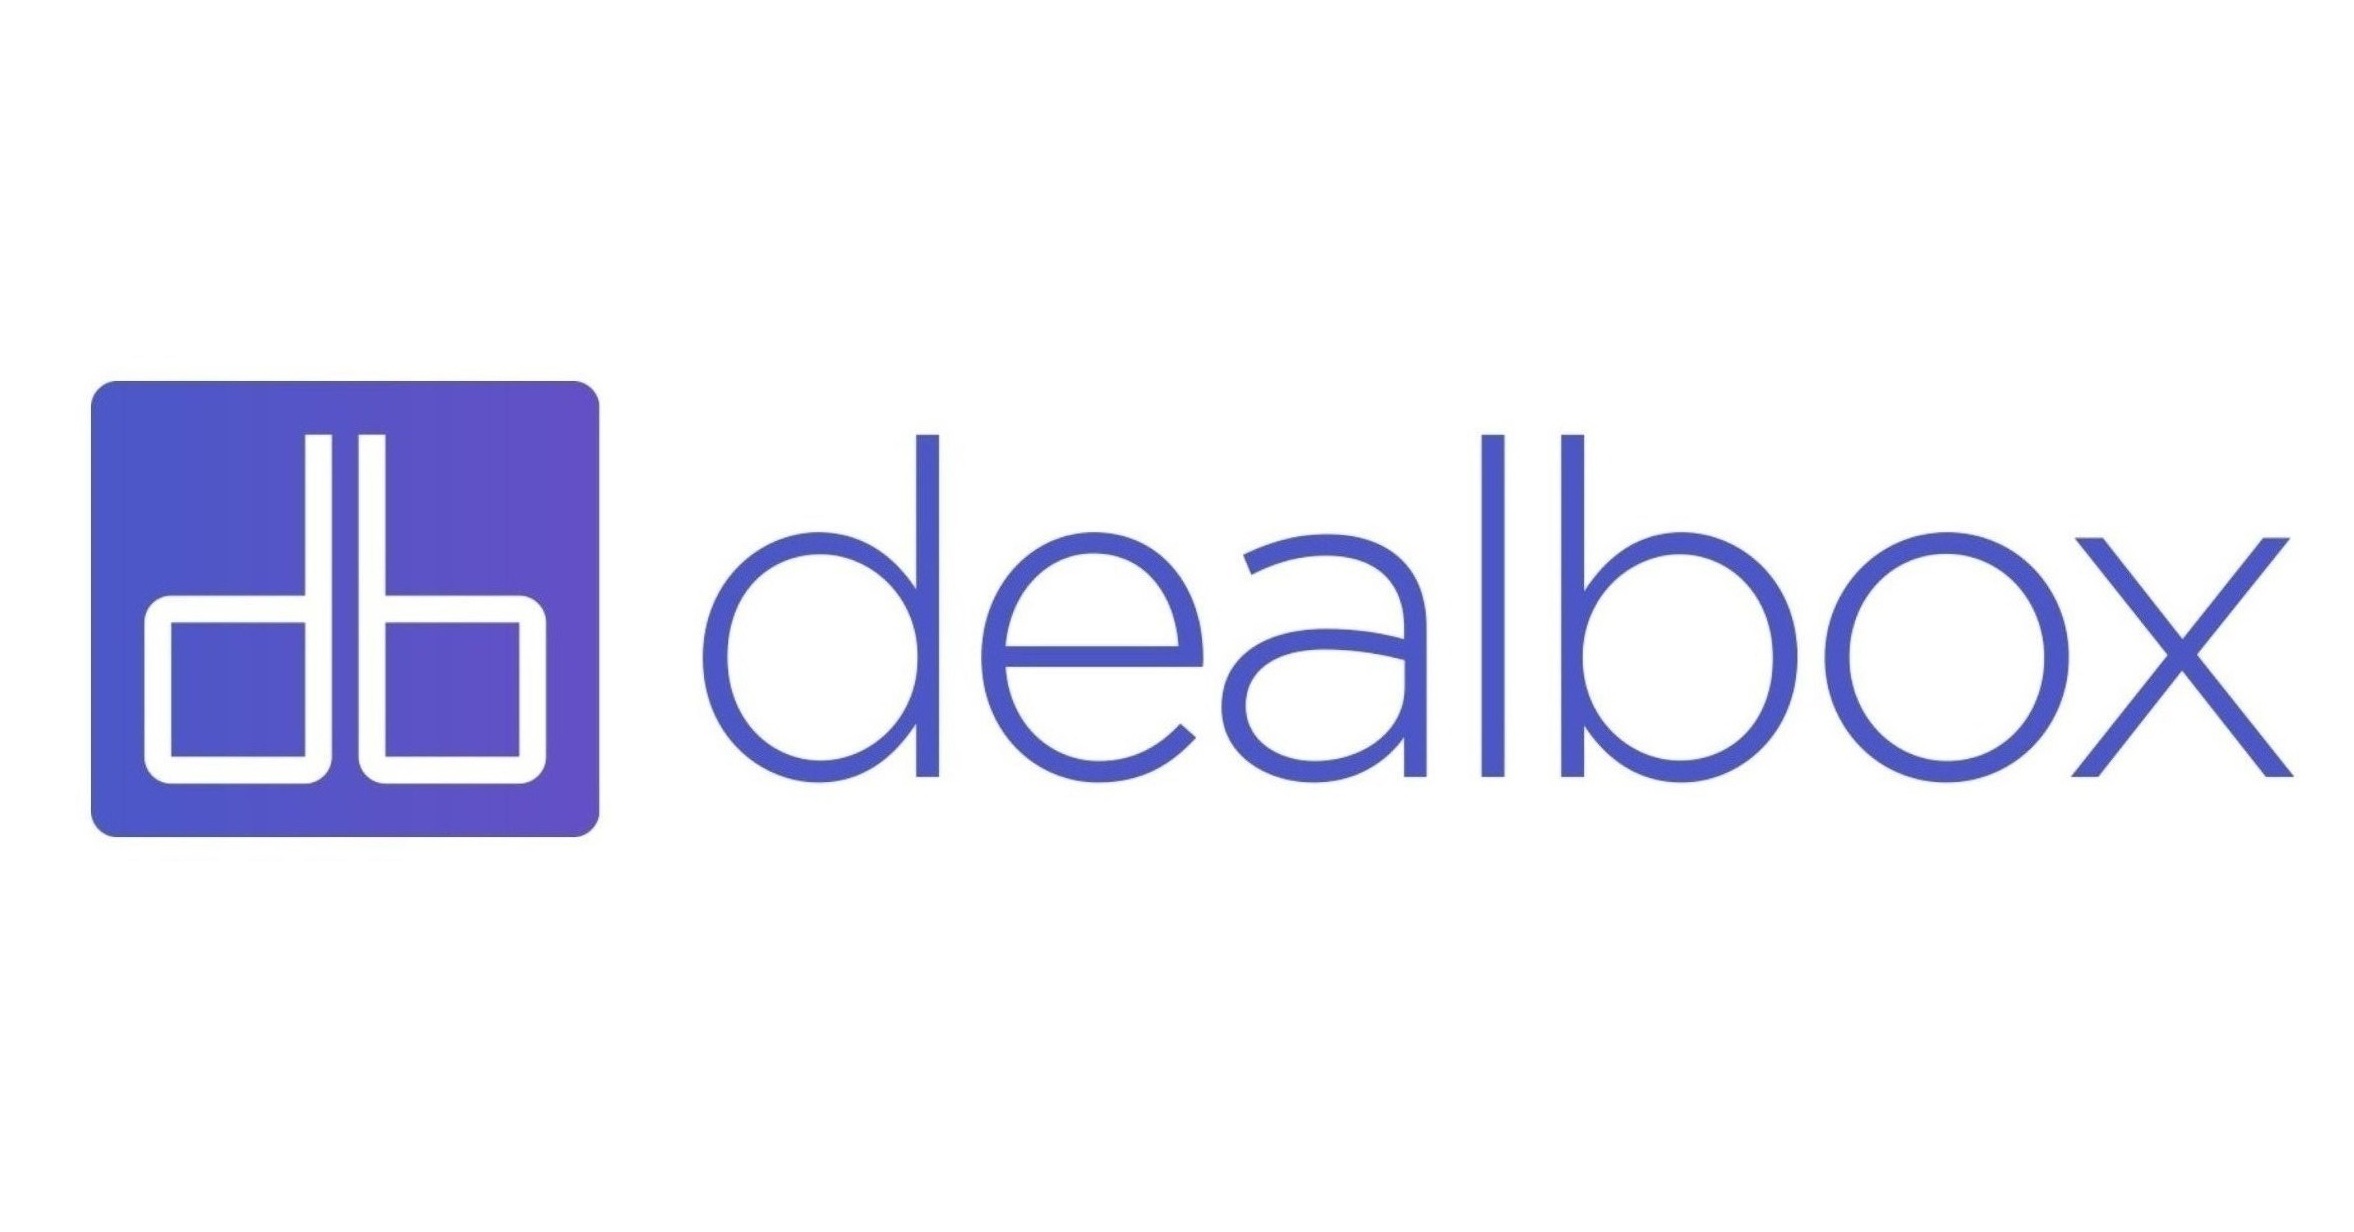 Deal box official Logo.jpg